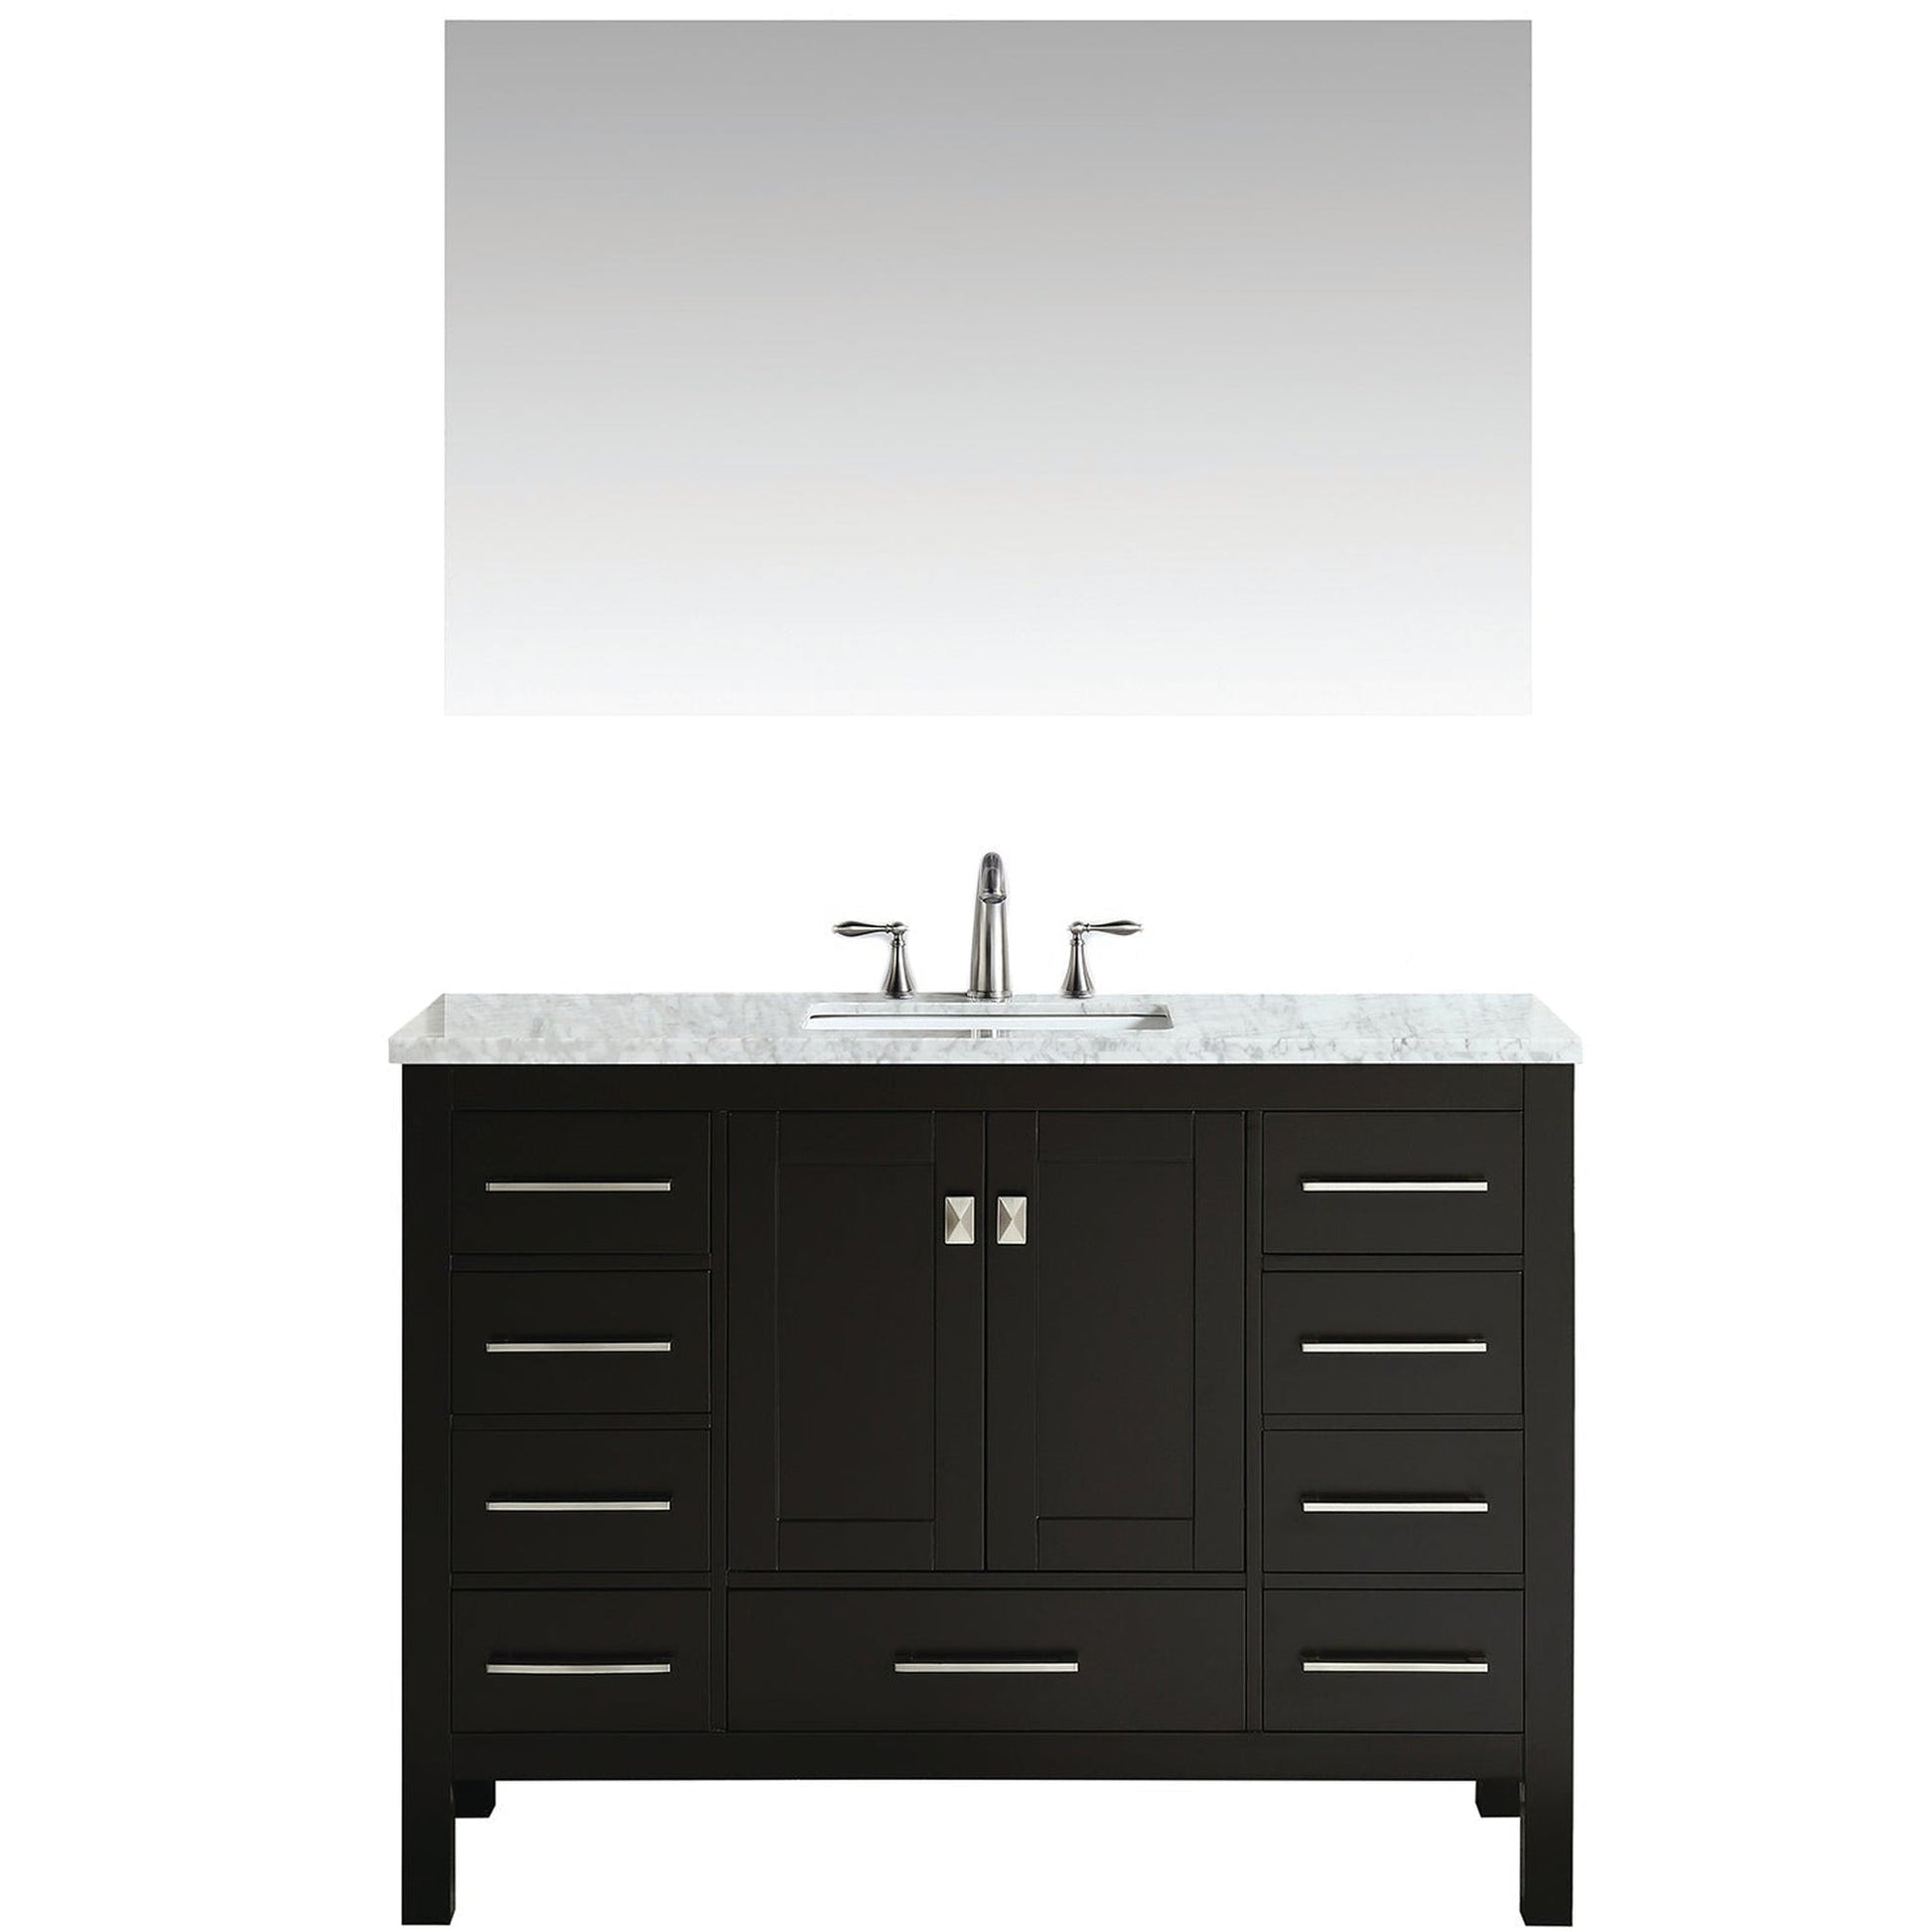 Eviva Aberdeen 42” x 34” Espresso Freestanding Bathroom Vanity With Single Undermount Sink